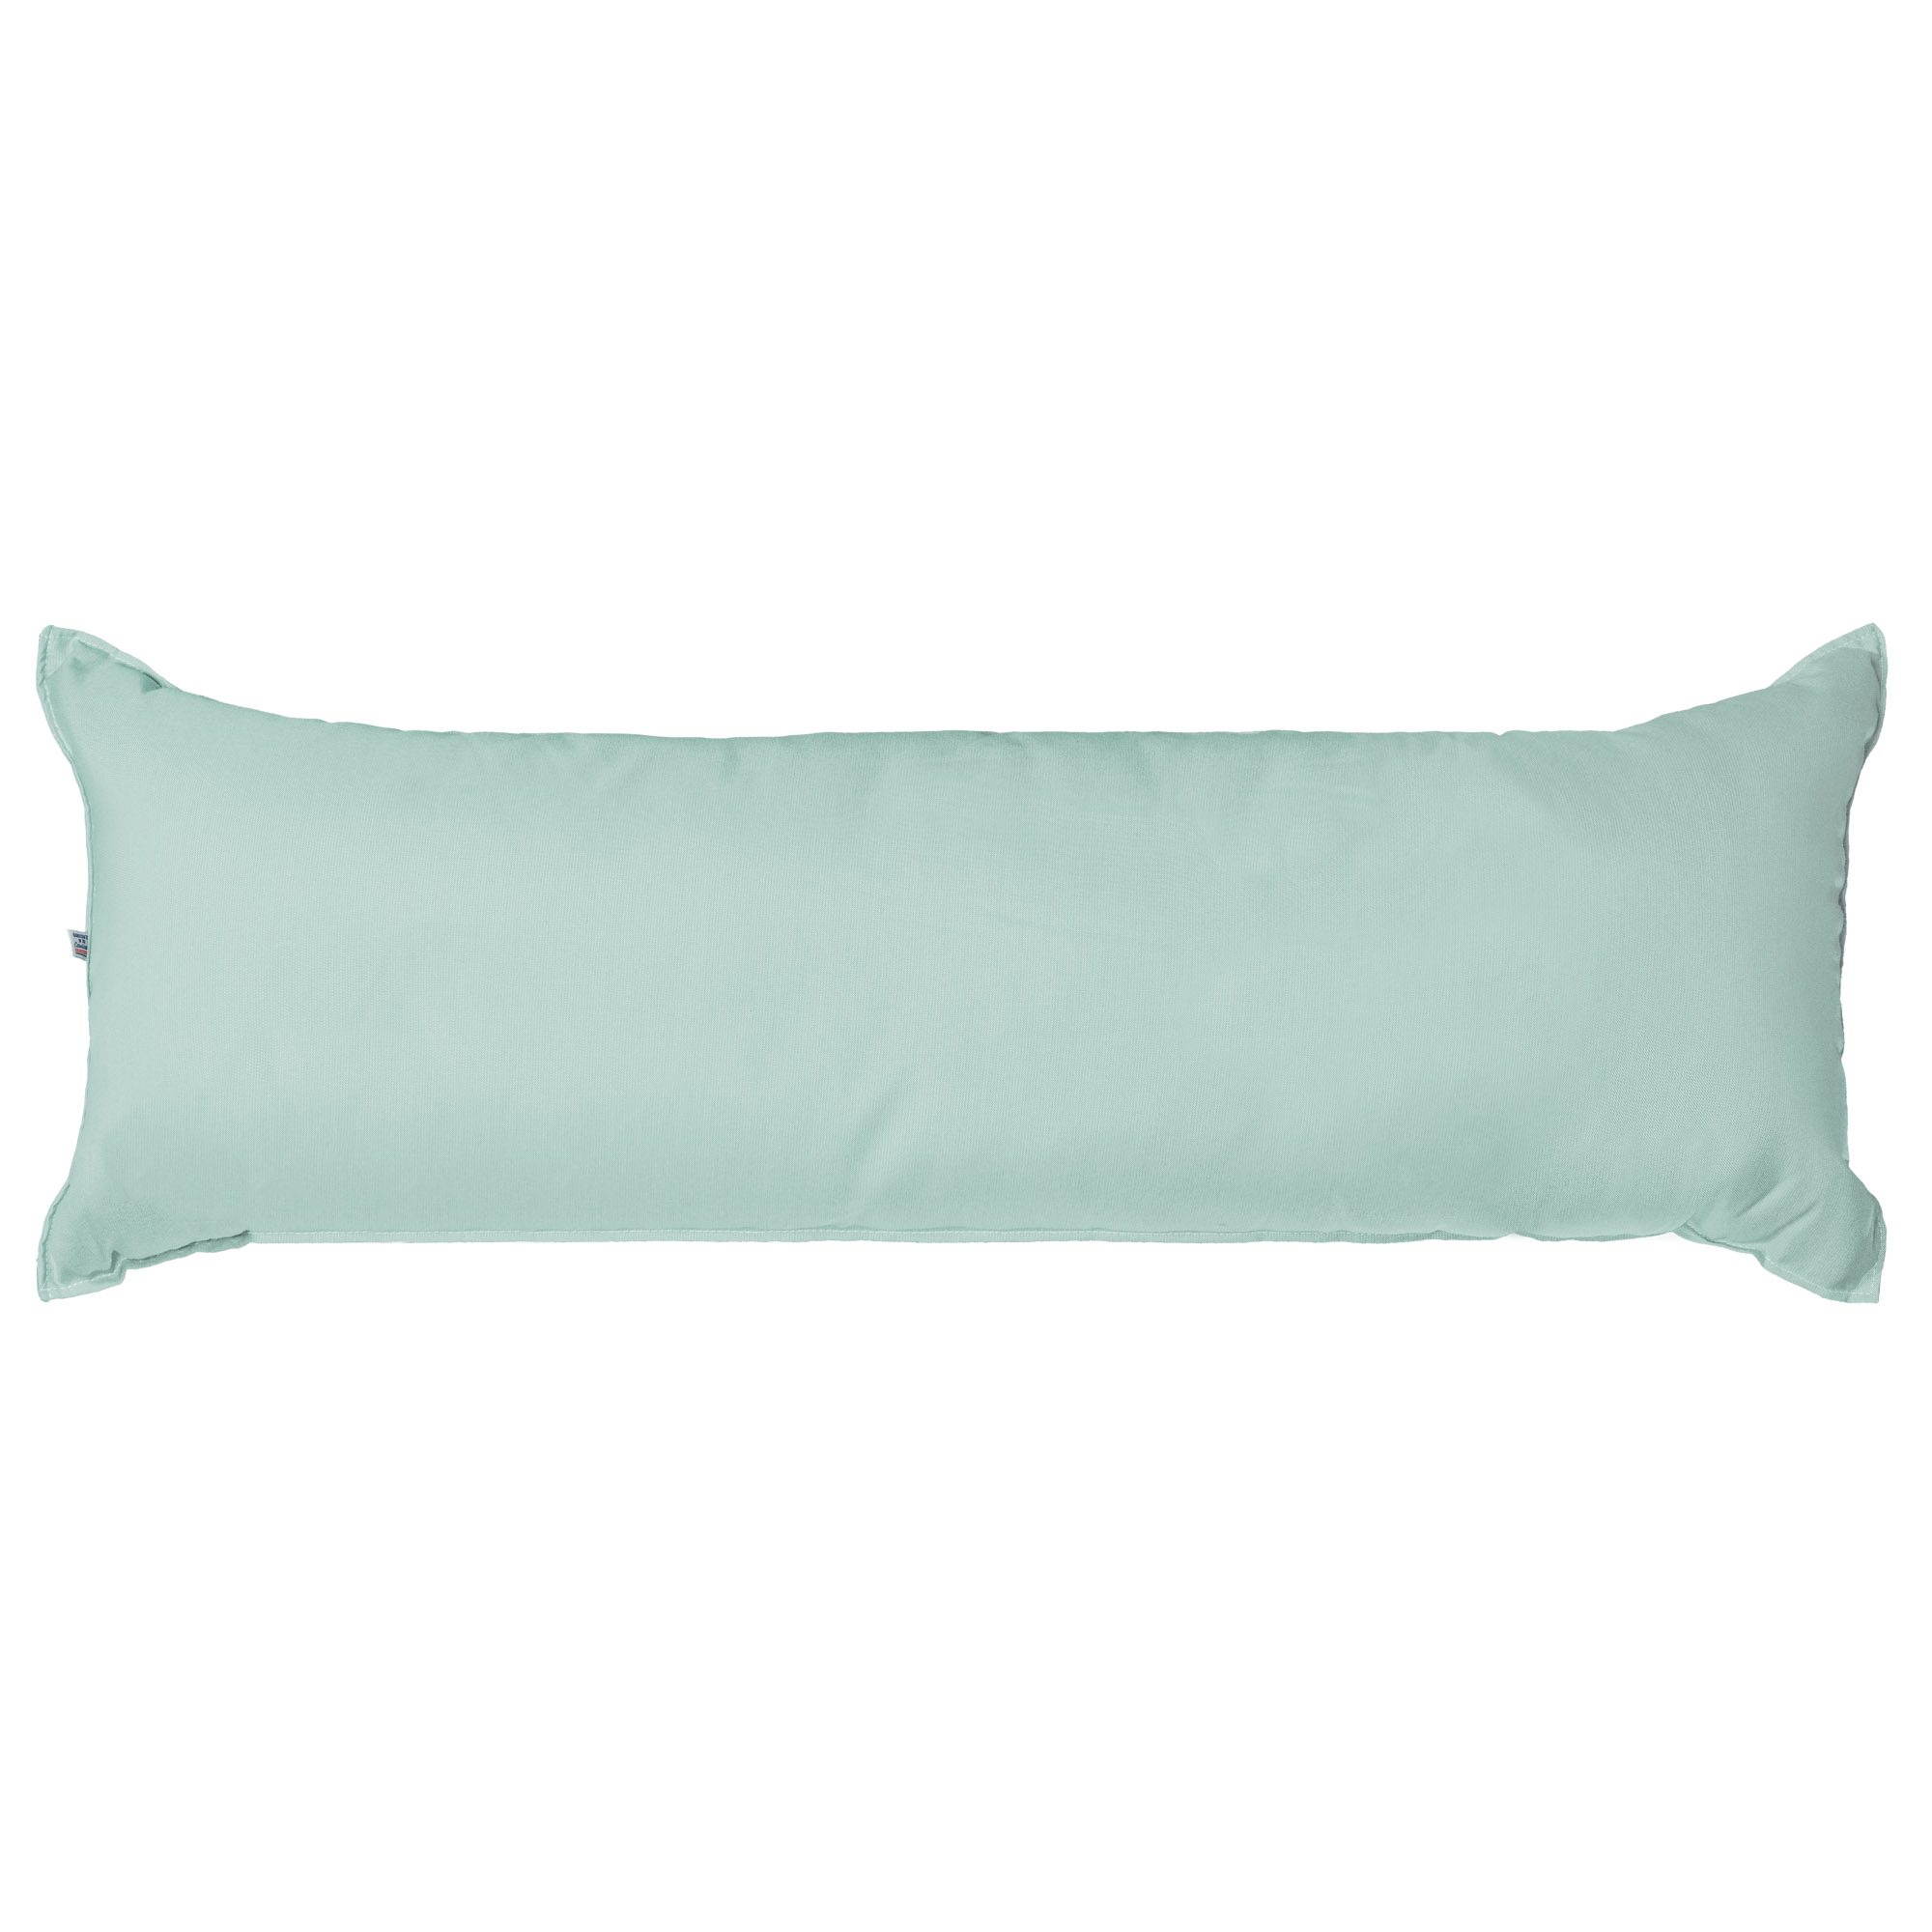 long outdoor pillow